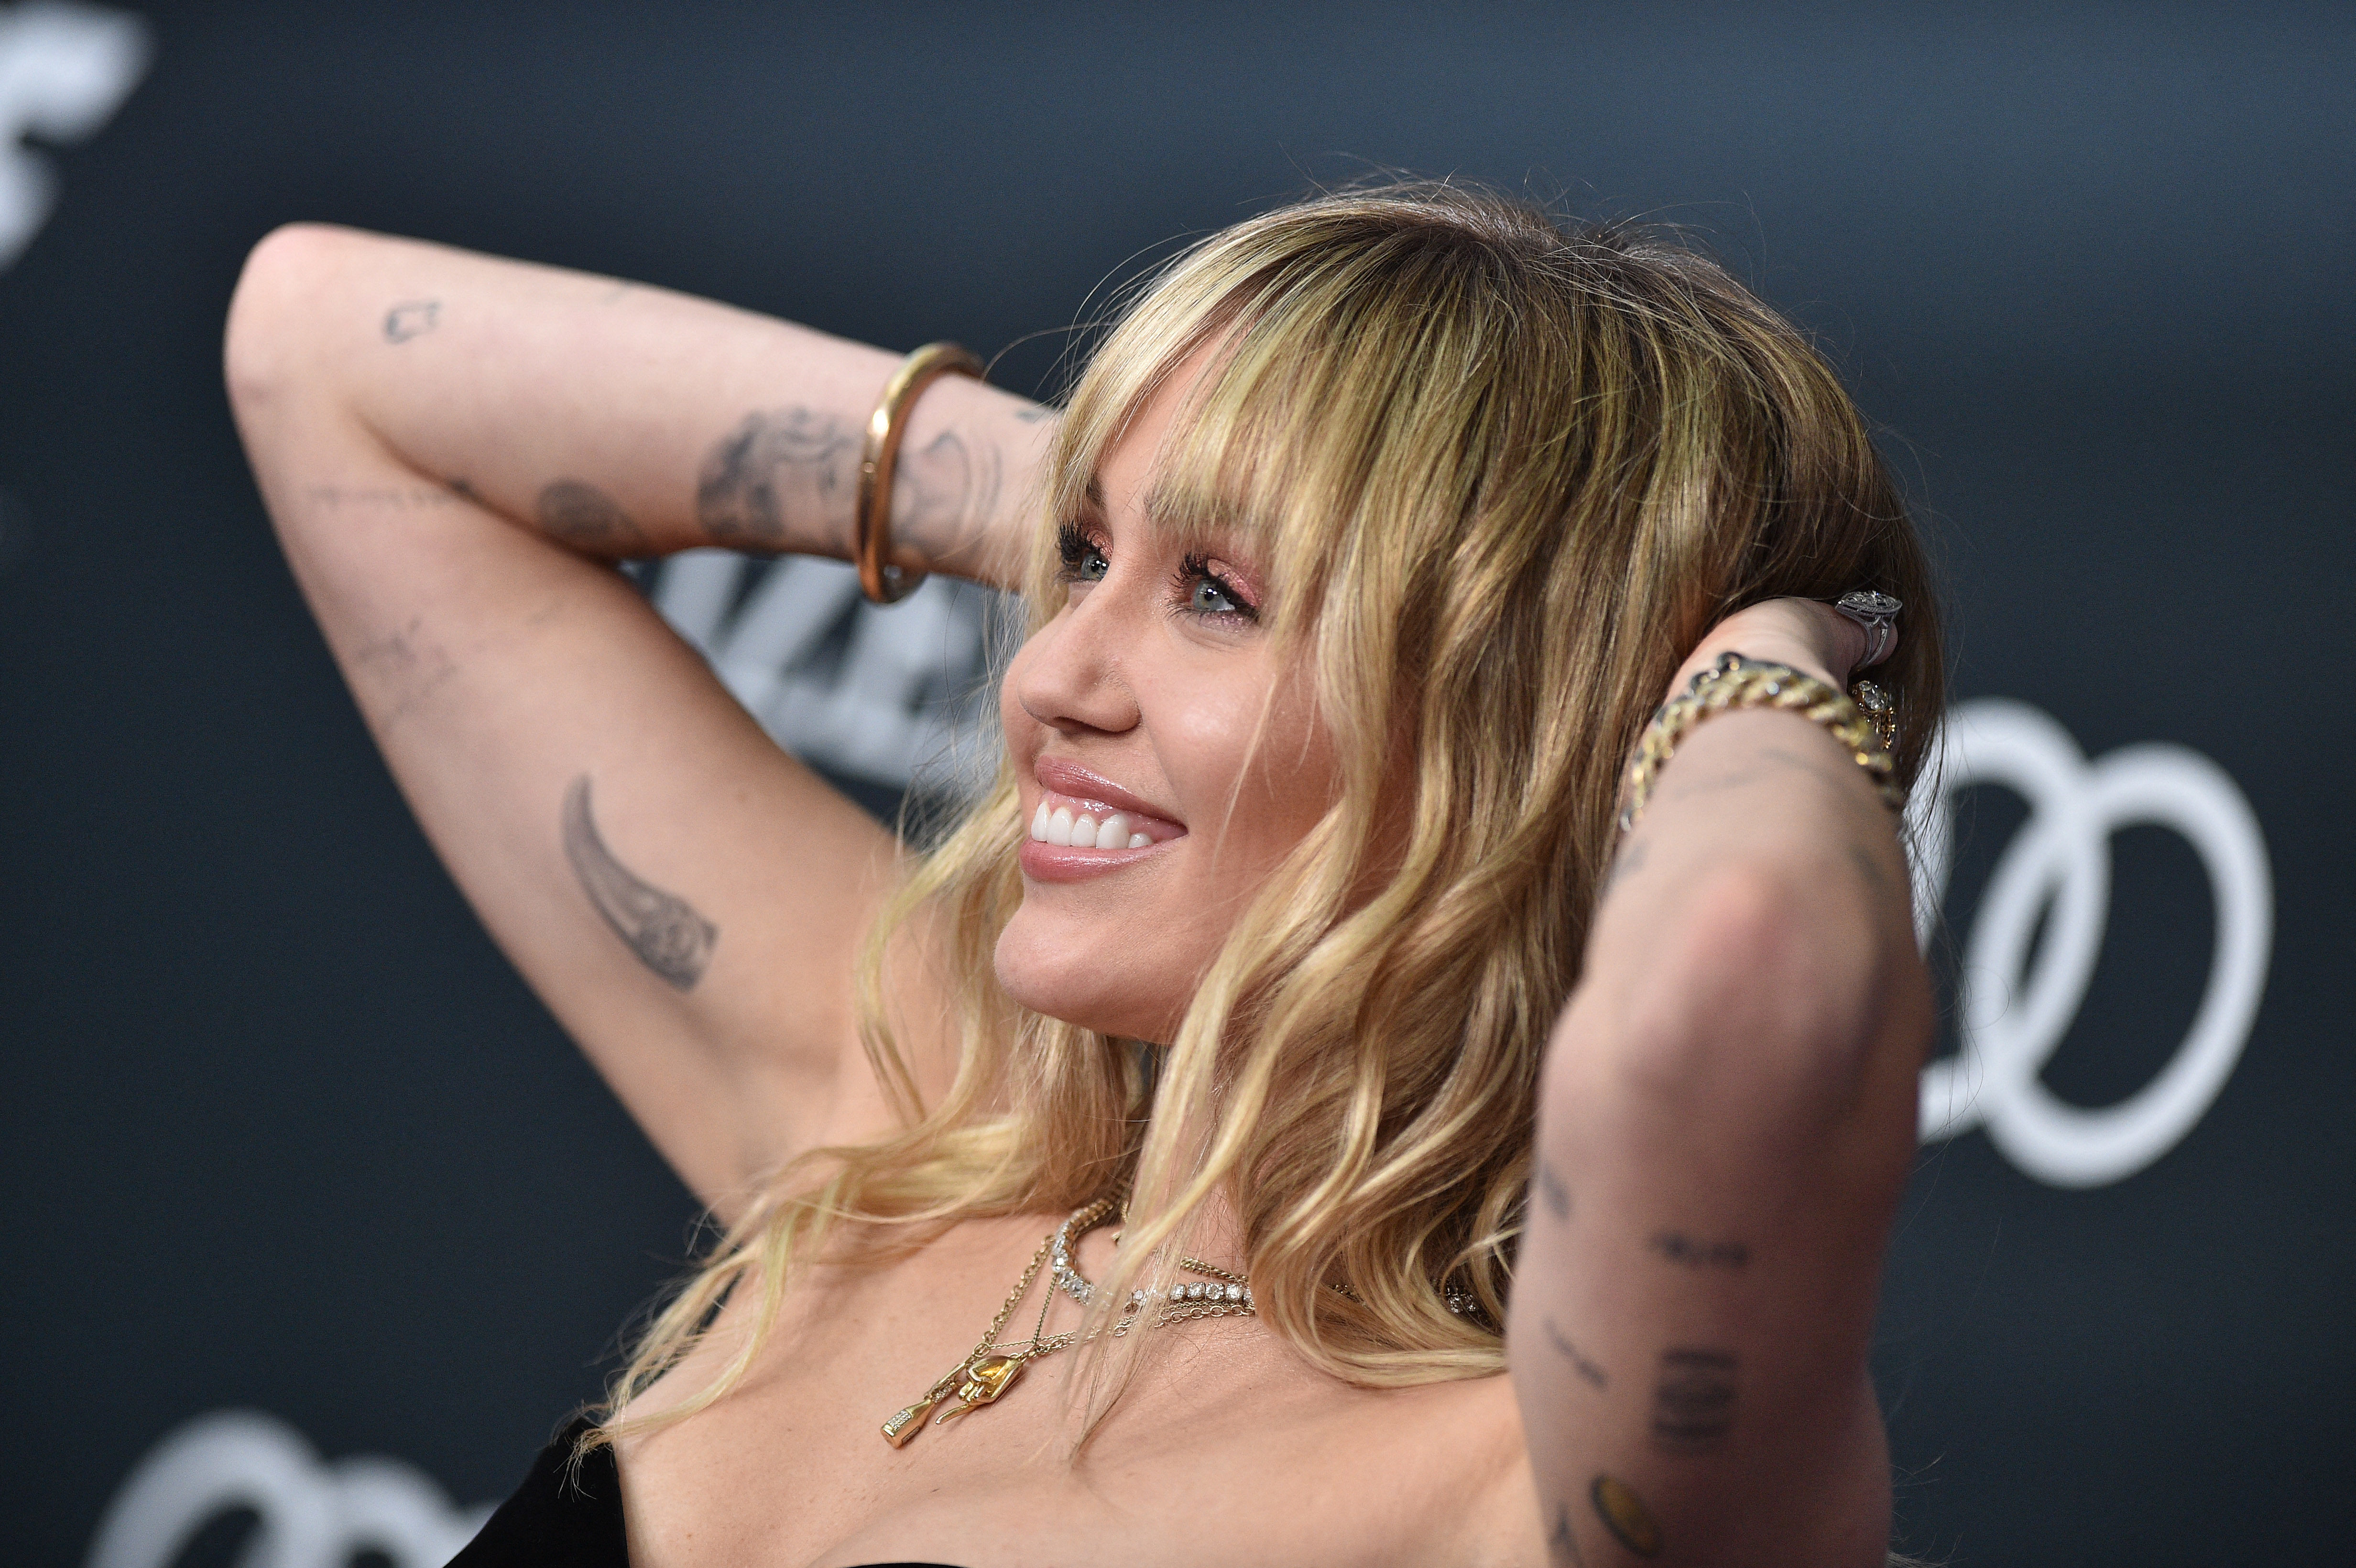 Miley Cyrus superfan Carl McCoids tattoos are creepy says popstar  Metro  News